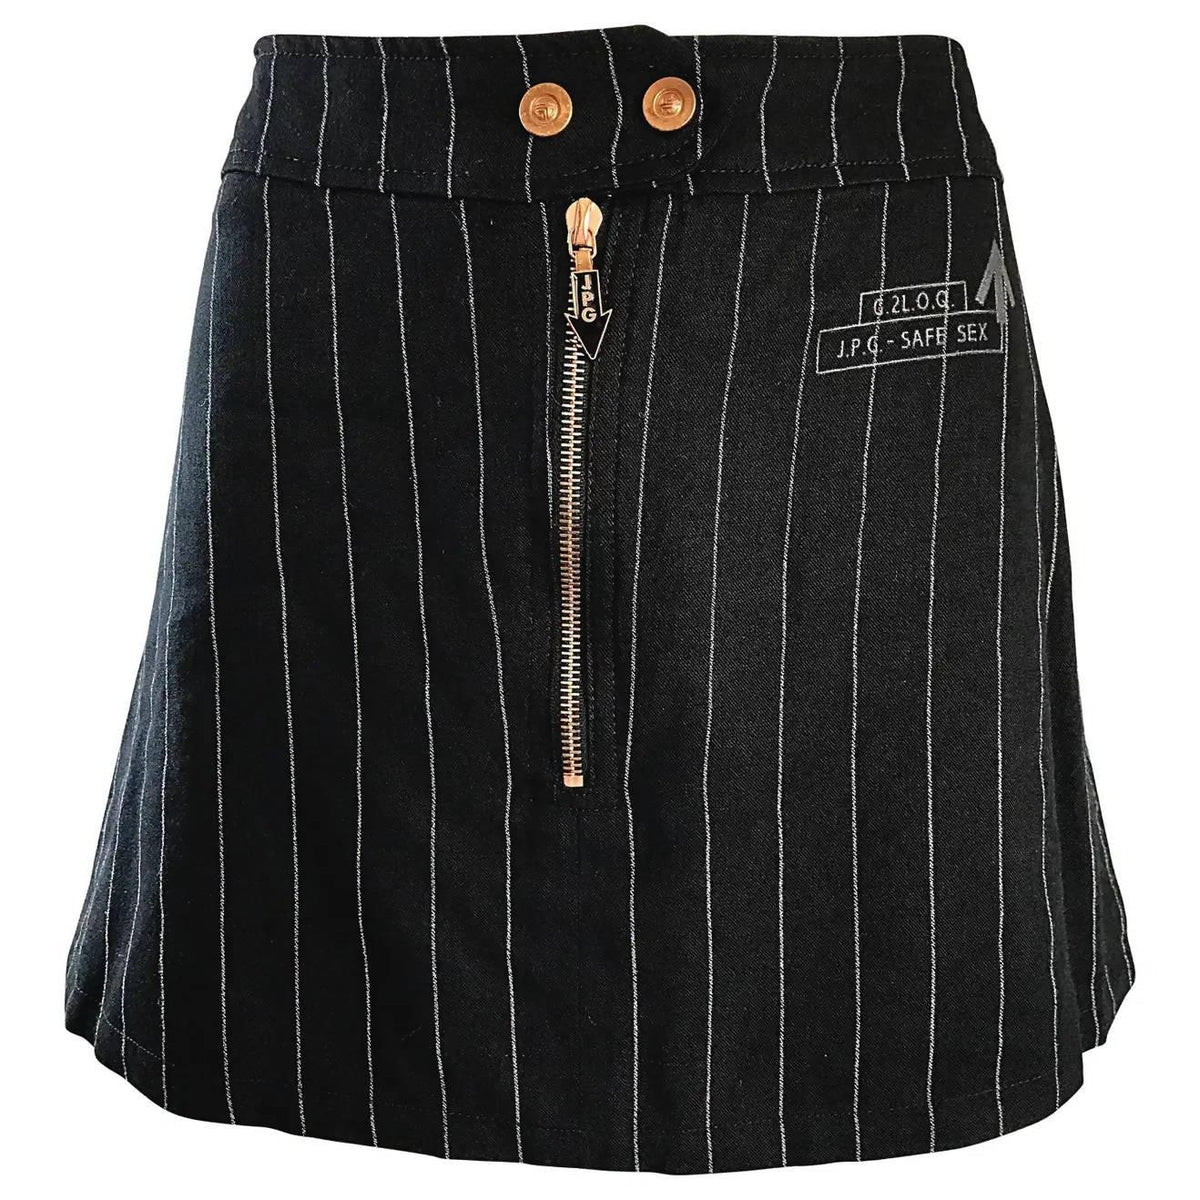 Pre-Owned JEAN PAUL GAULTIER "Safe Sex" Black & White Pinstripe Mini Skirt - theREMODA